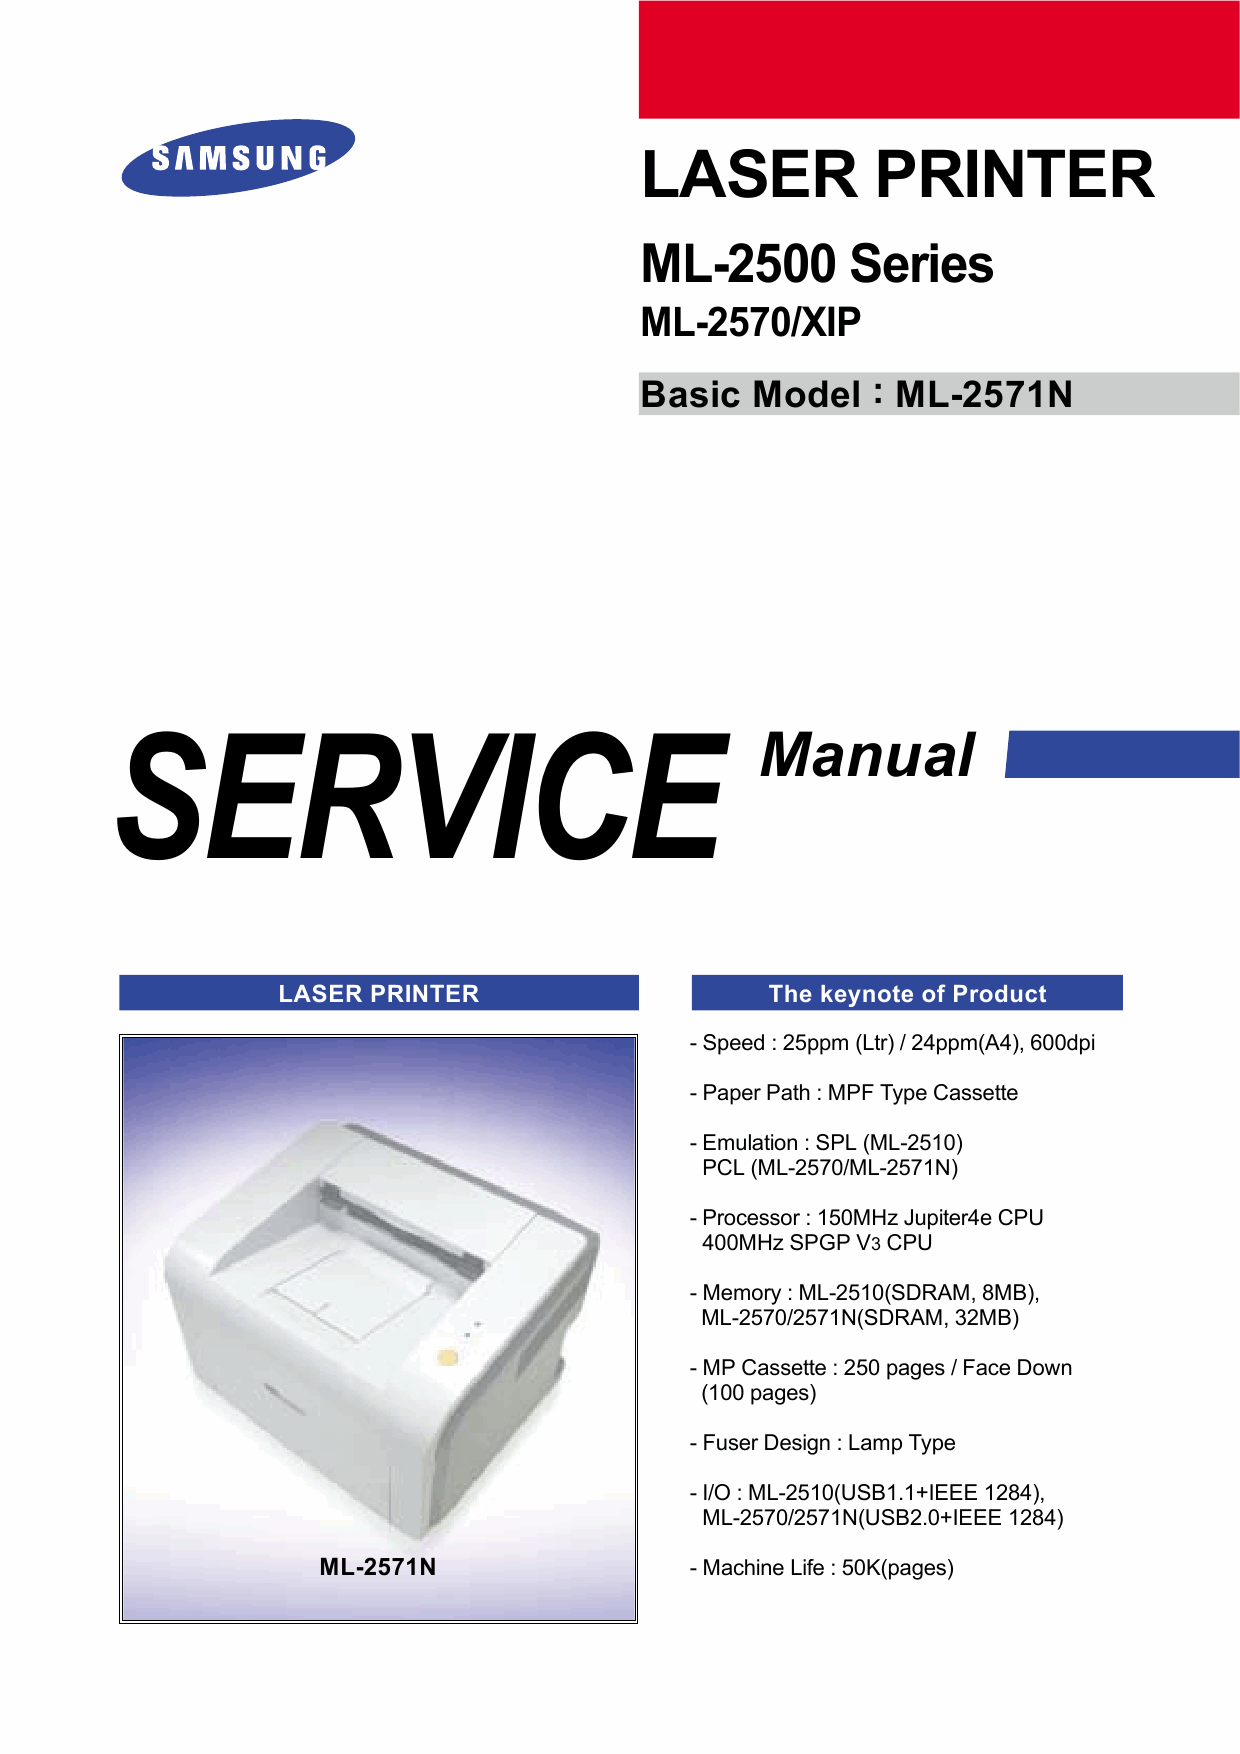 Samsung Laser-Printer ML-2570 2571N Parts and Service Manual-1